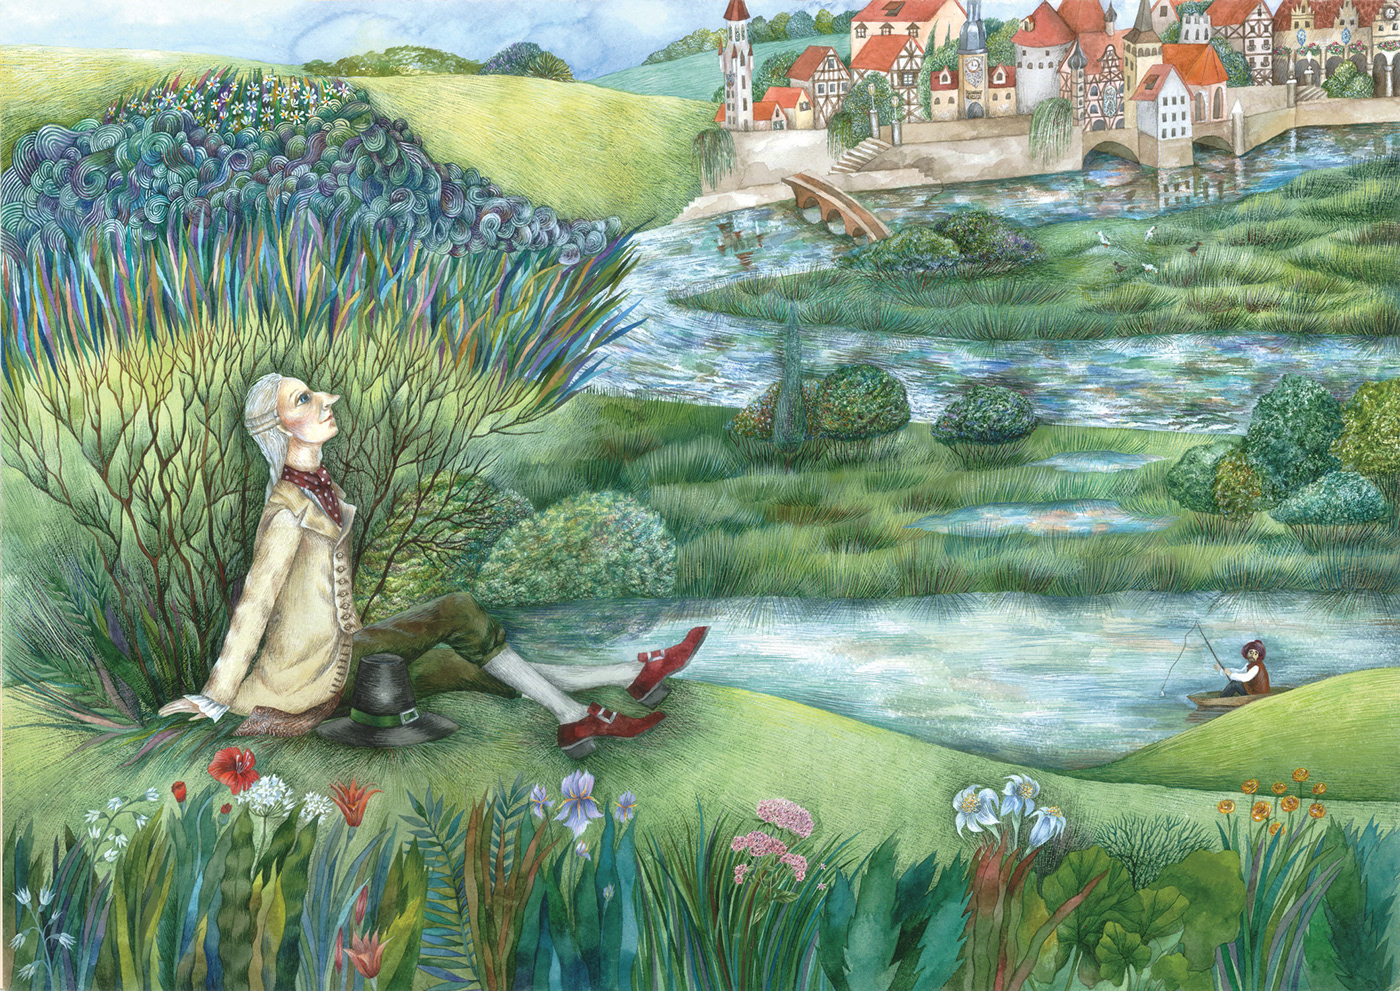 book cover book illustratin children book fairy tale Magic   painting   watercolor